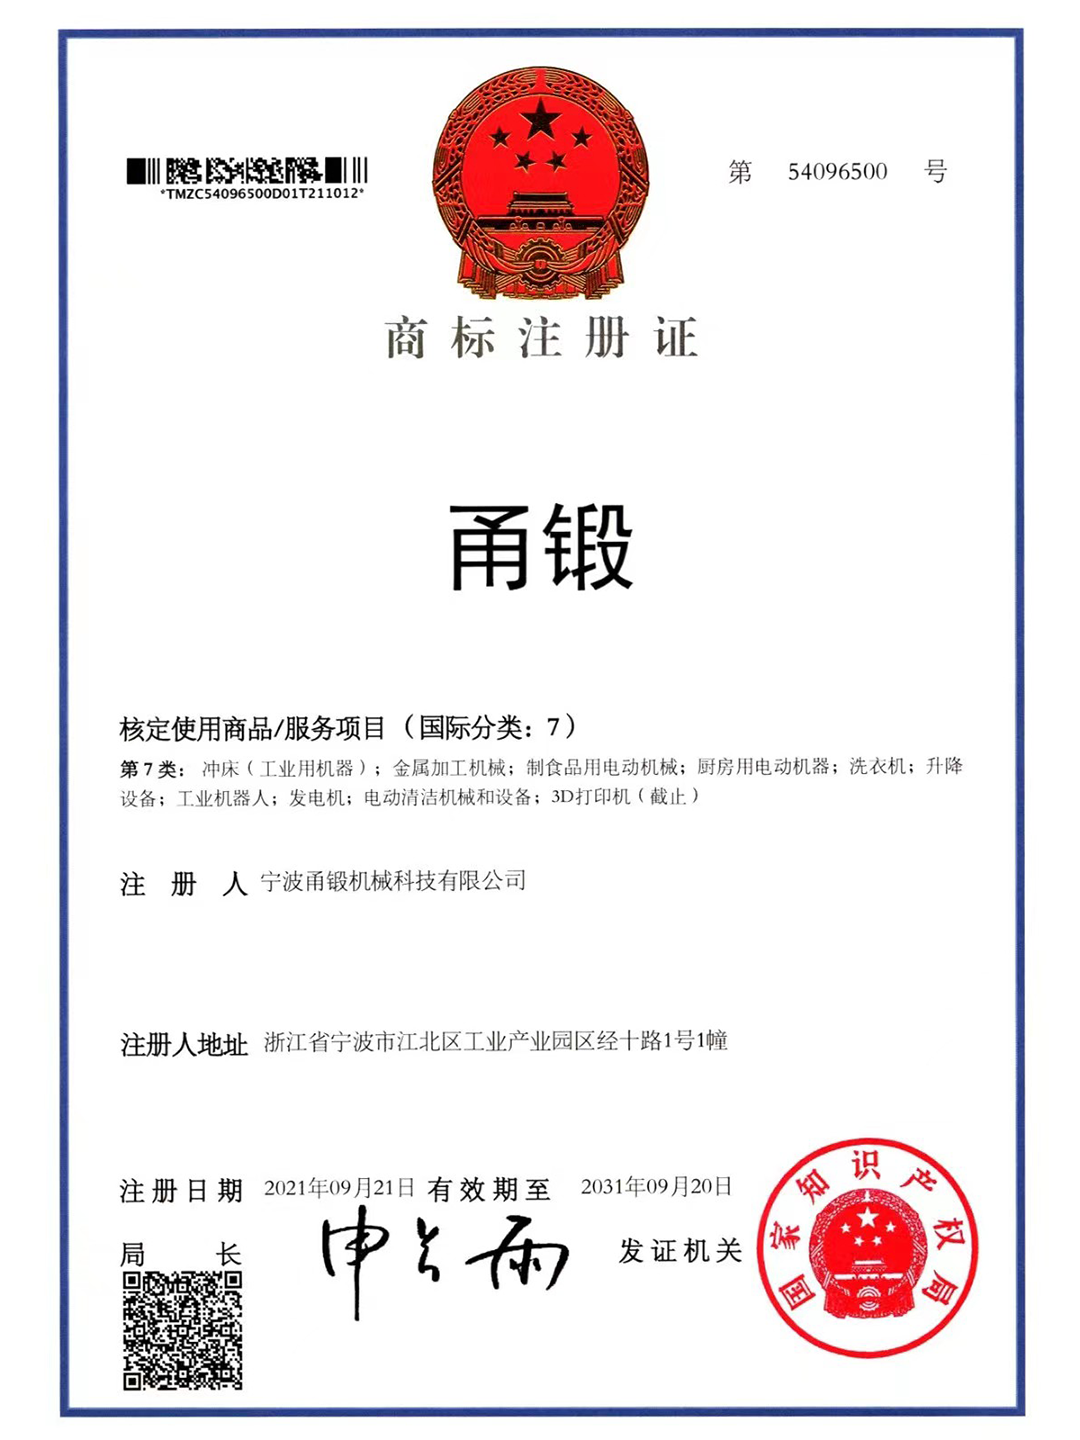 Ningbo Forging Trademark Registration Certificate